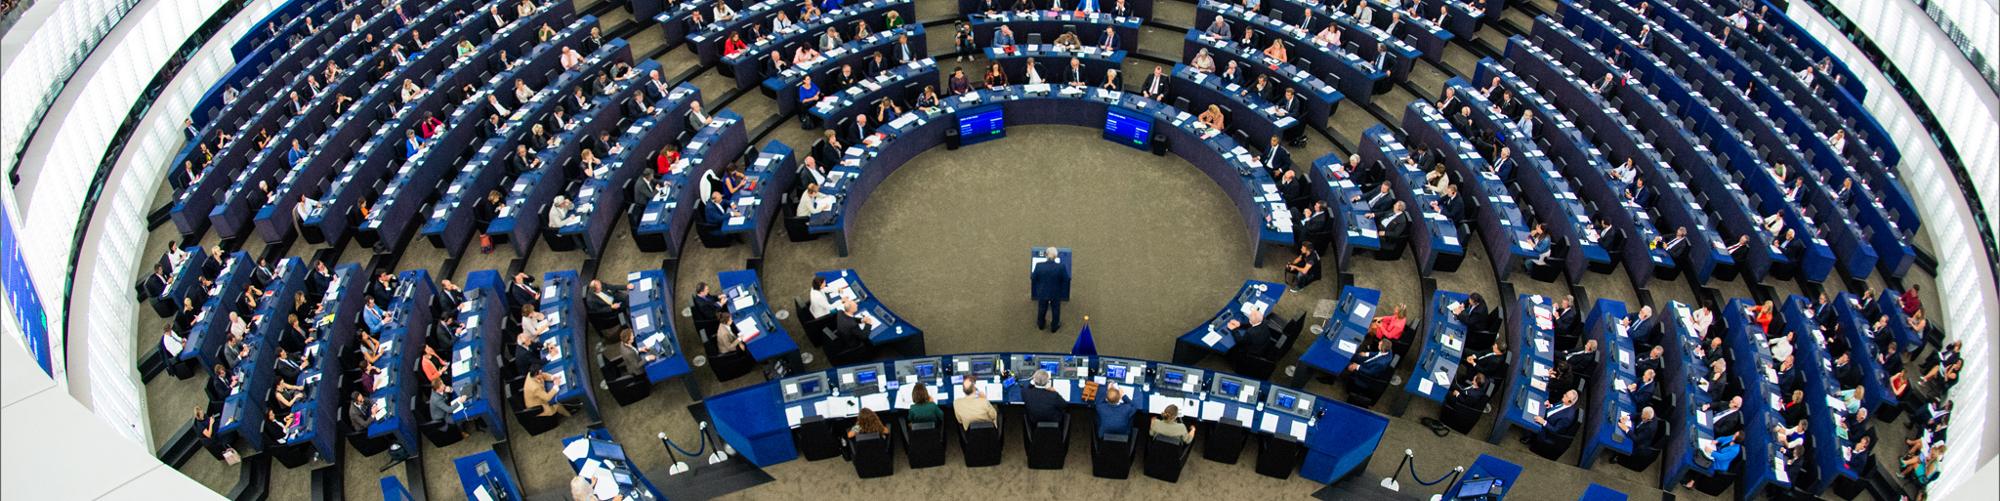 c European Union European Parliament state of the Union 2018